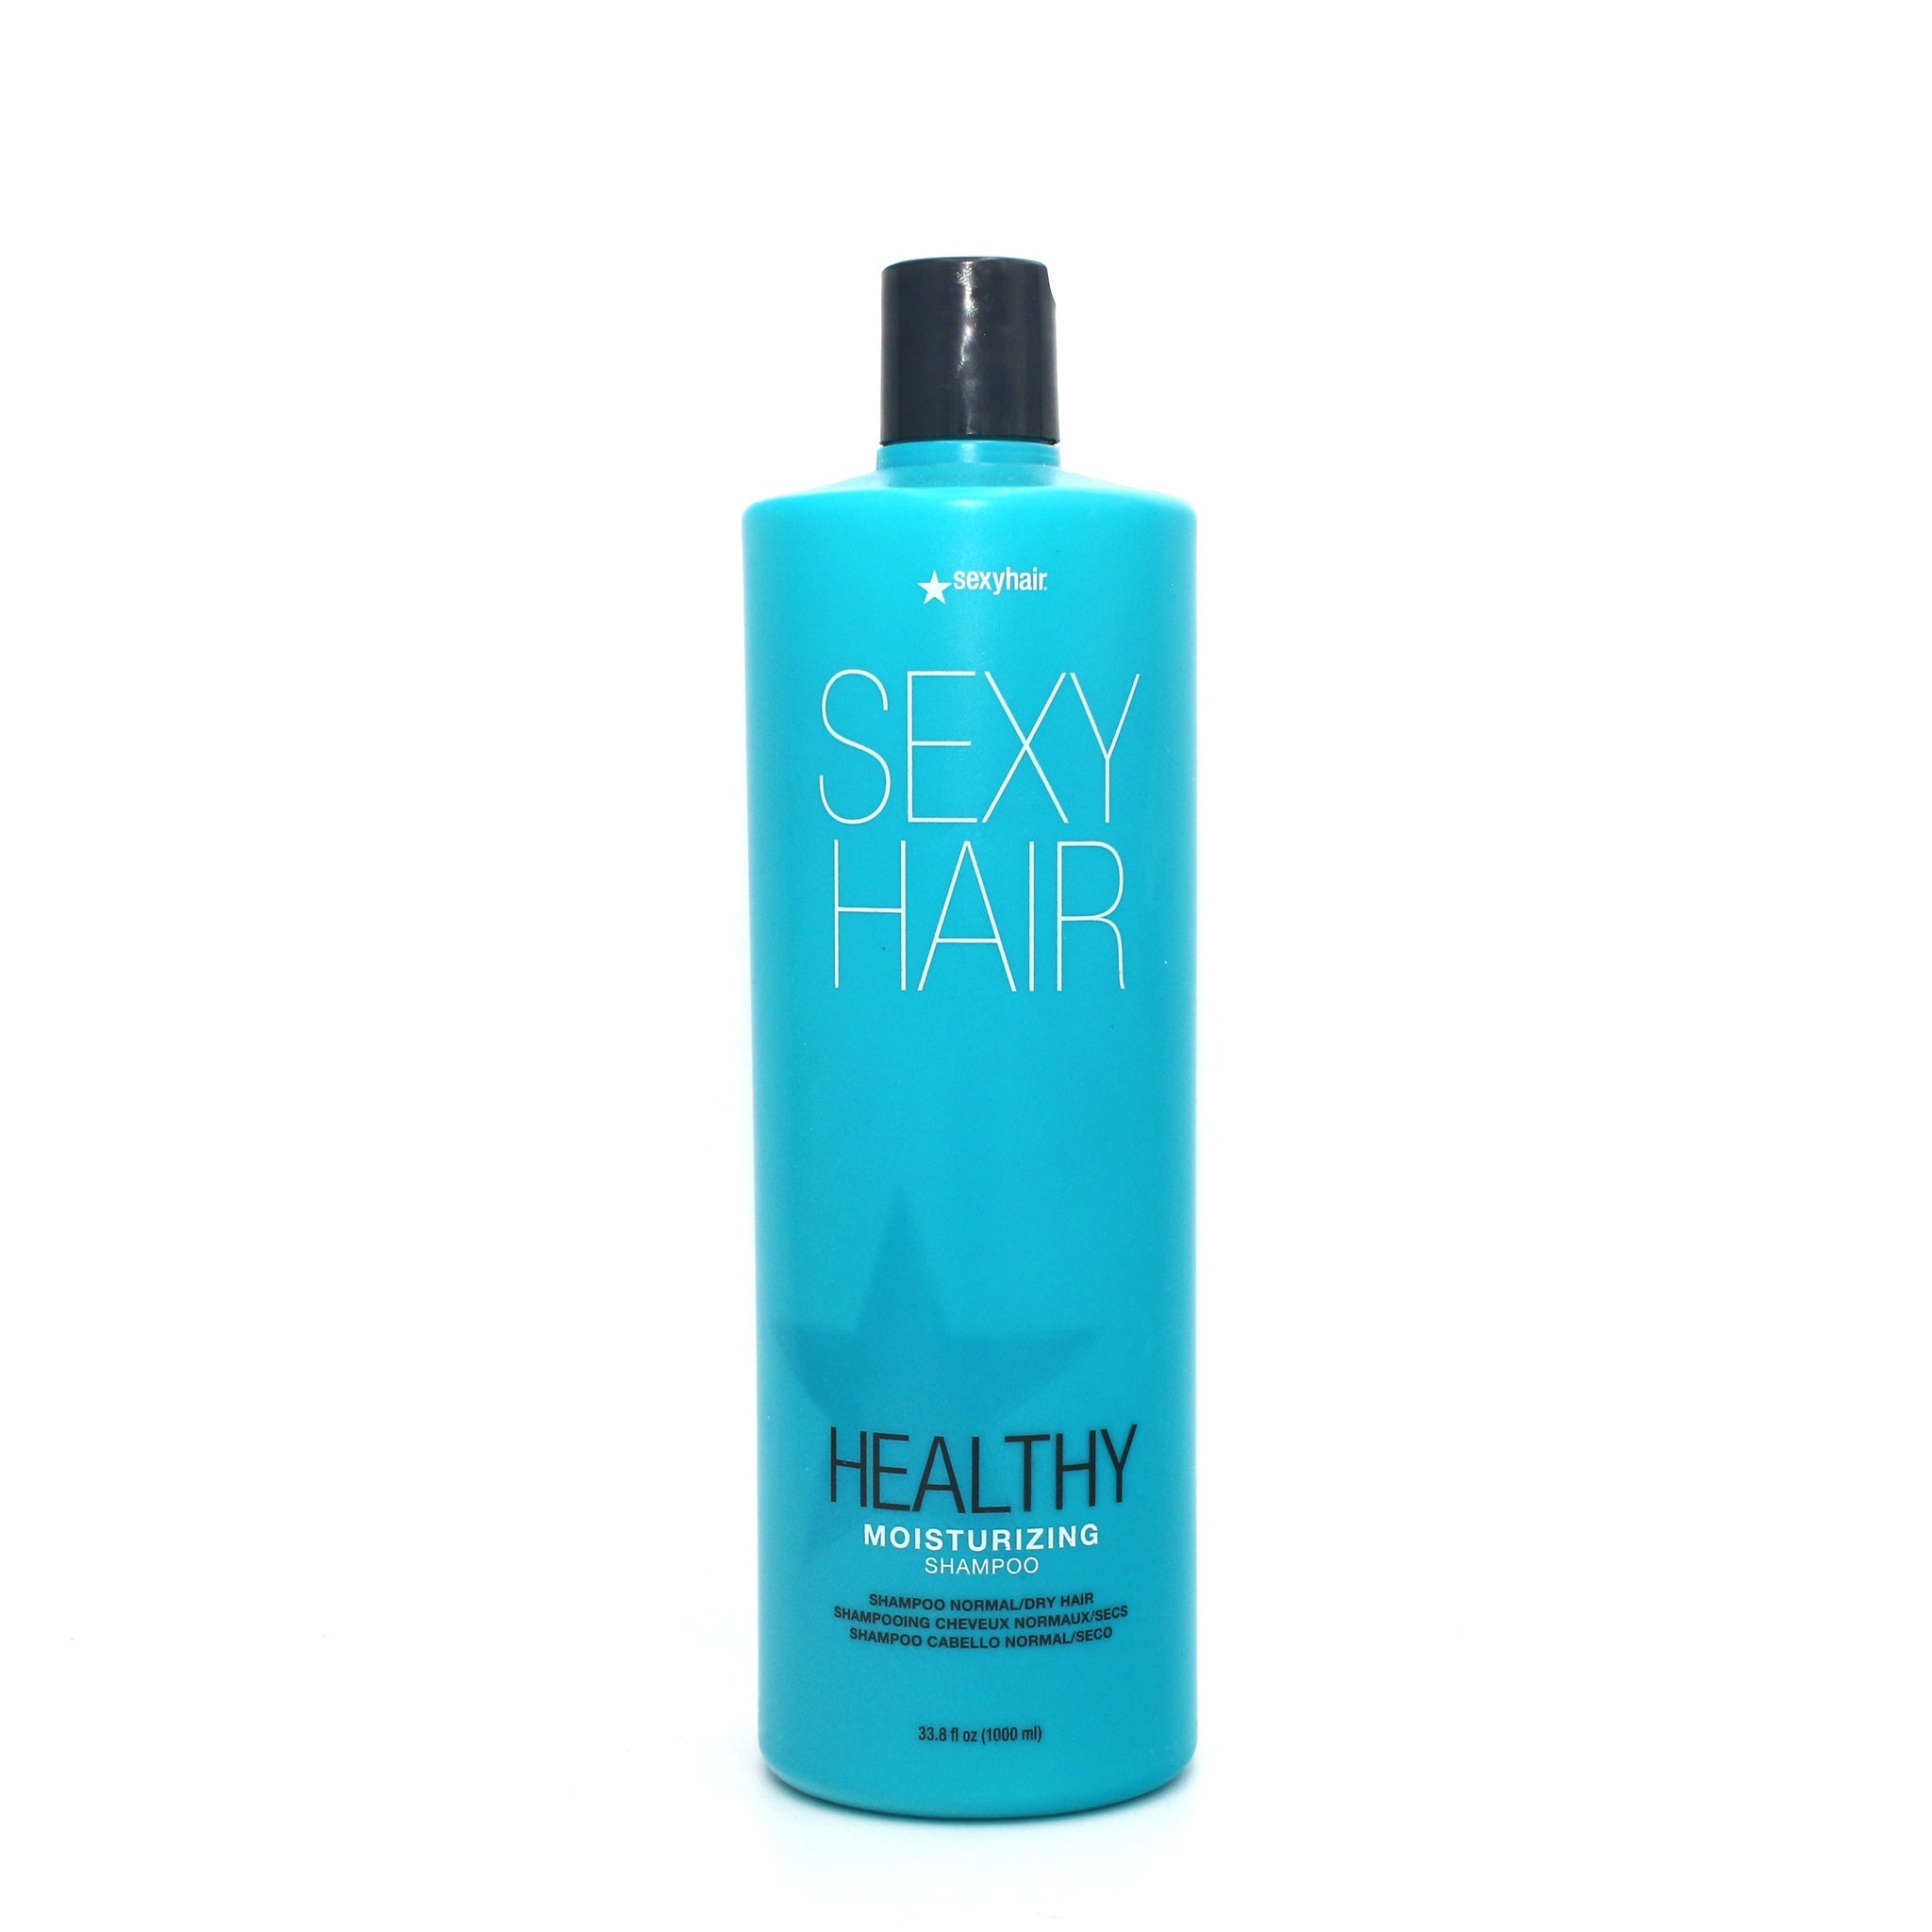 SEXY HAIR Healthy Moisturizing Shampoo 33.8 oz